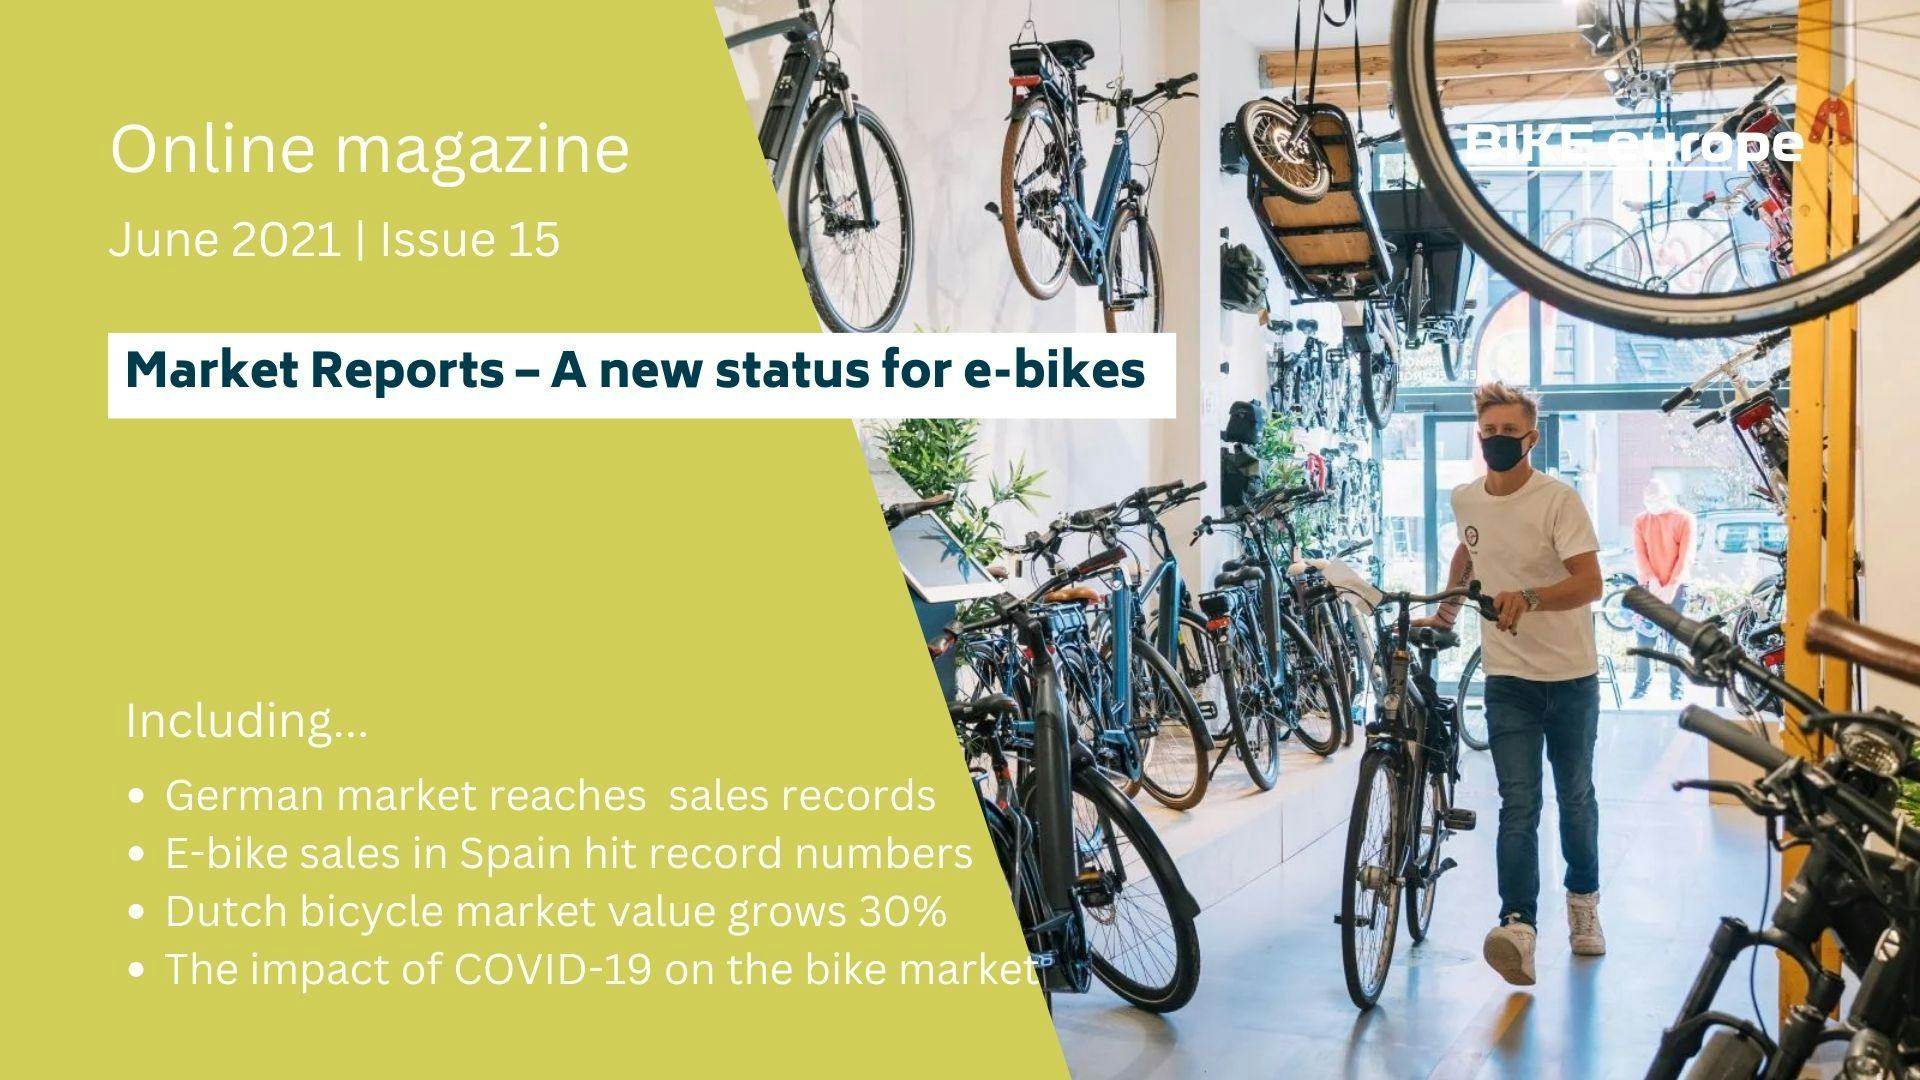 Online Magazine: Market Reports - A new status for e-bikes